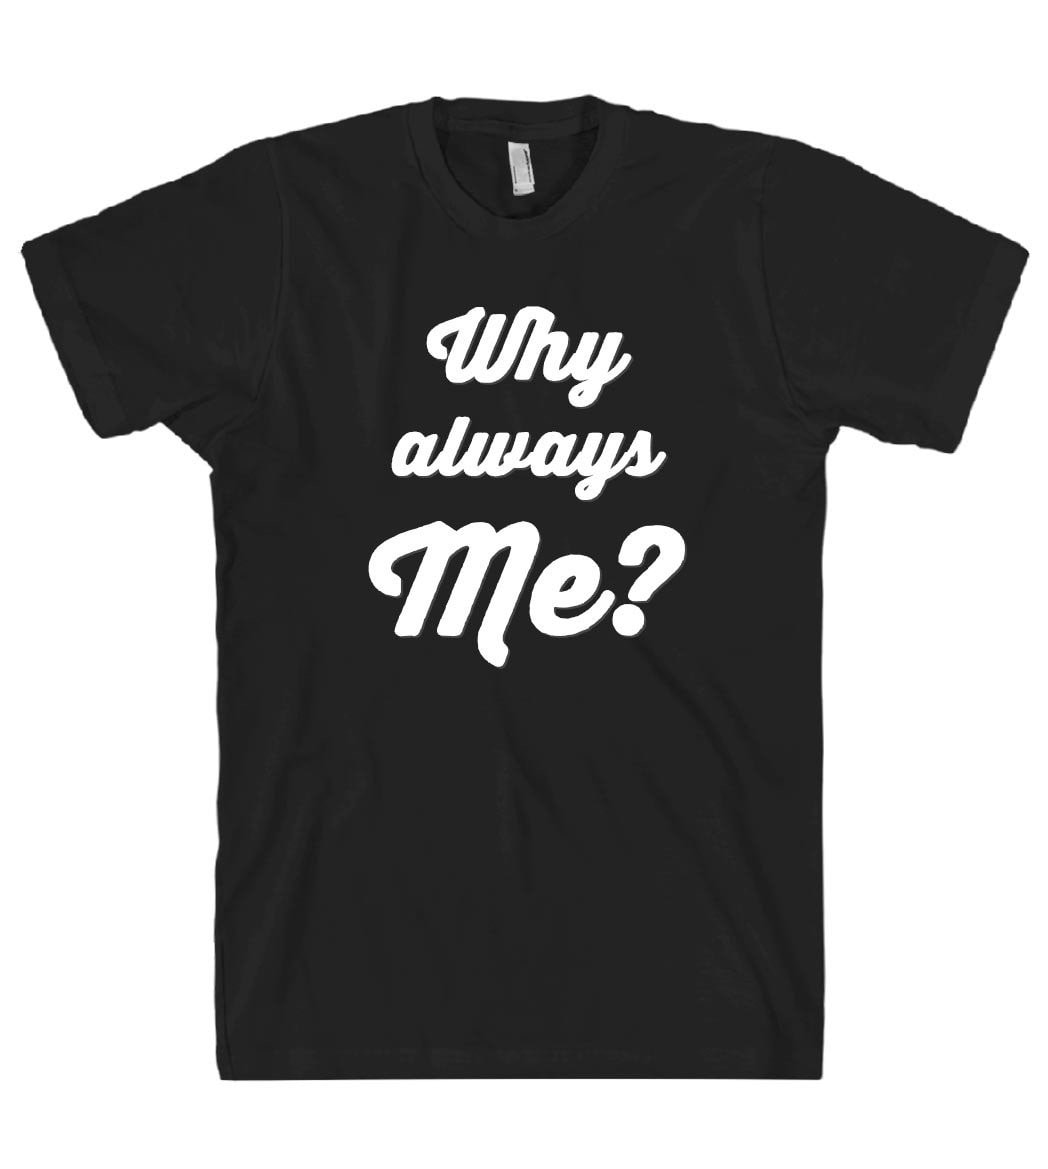 Why always Me? t shirt - Shirtoopia